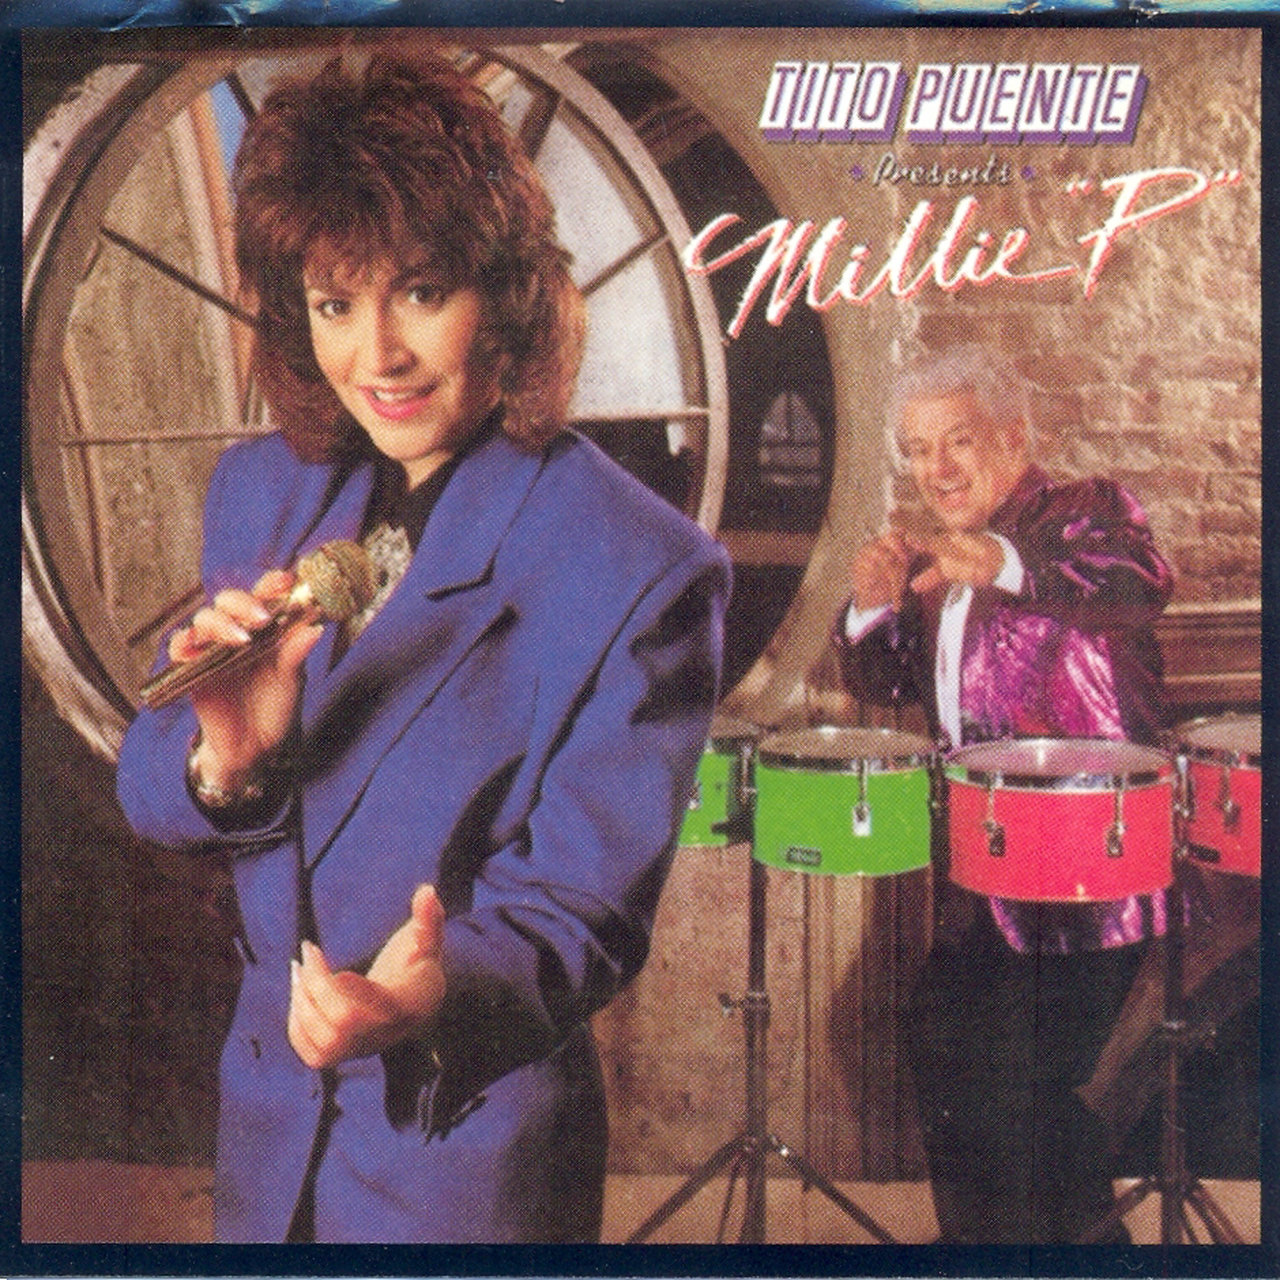 Tito Puente Presents Millie P[1990]